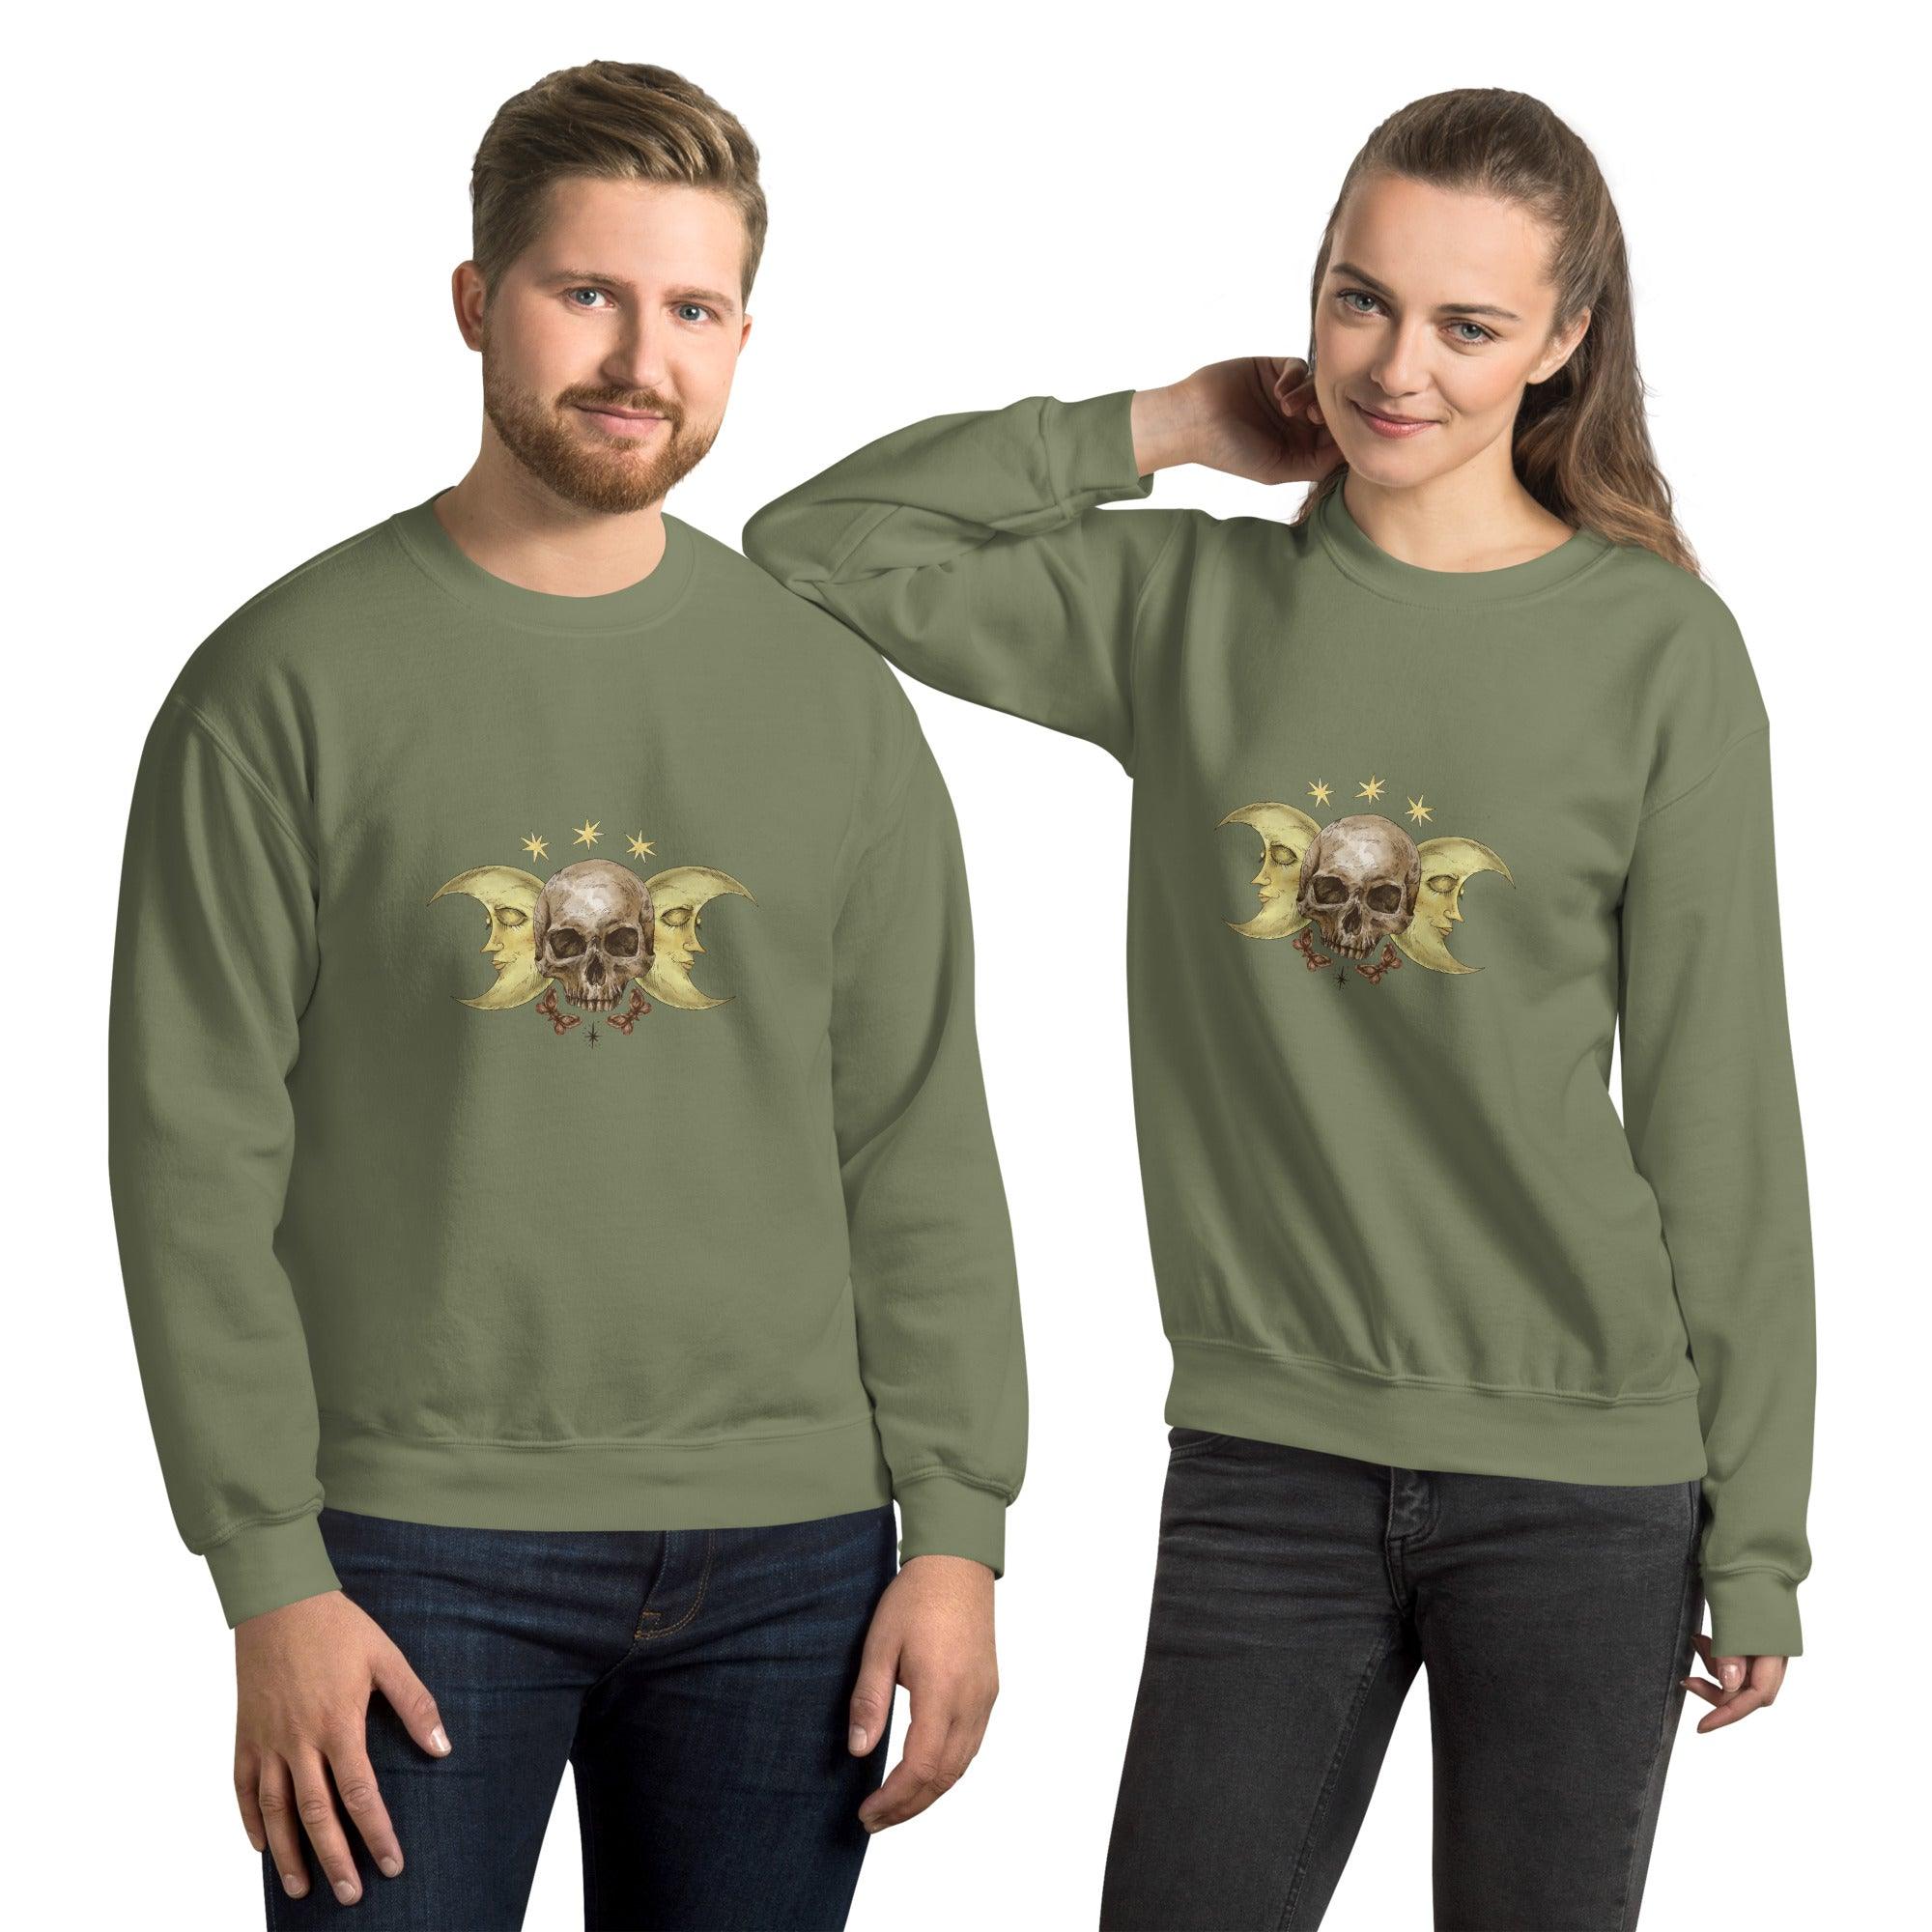 Sweatshirt Astros Unisexo - My dear oraculo store